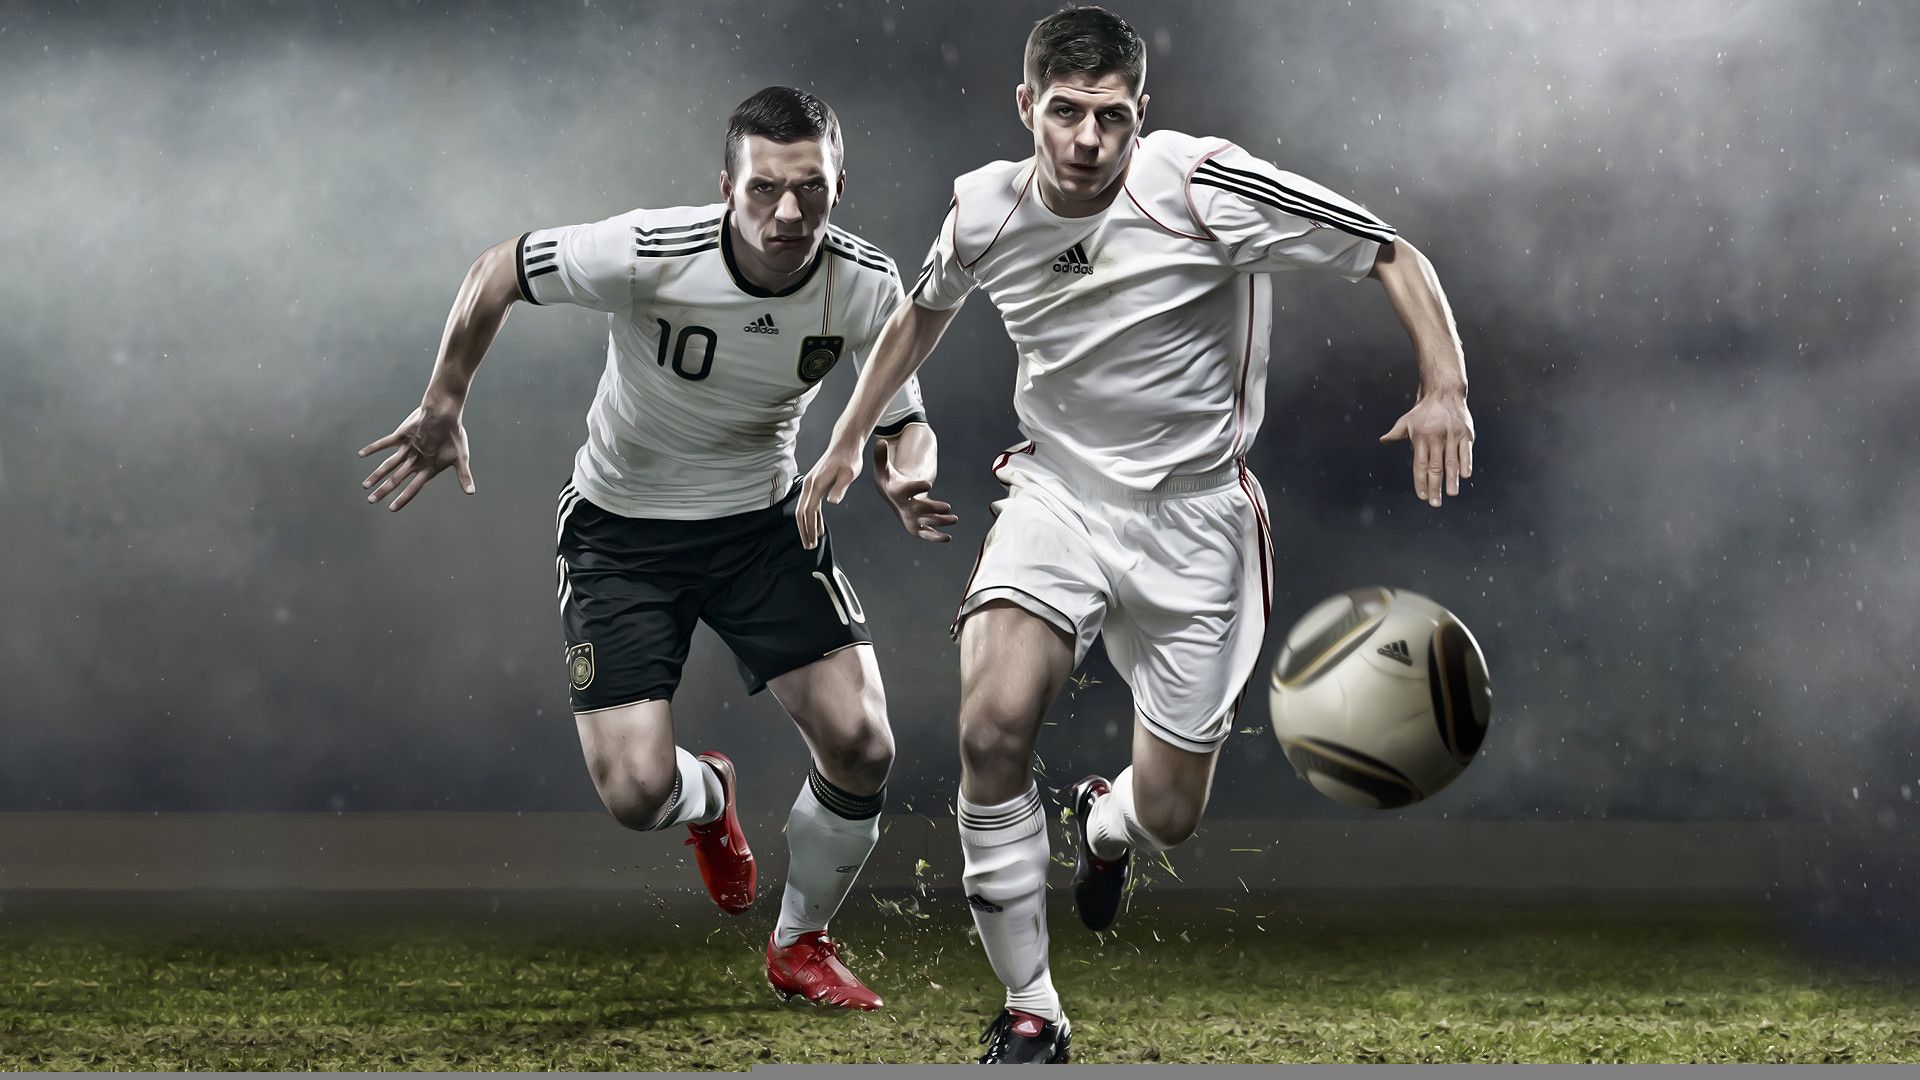 soccer wallpaper,sports,football player,soccer player,football,team sport